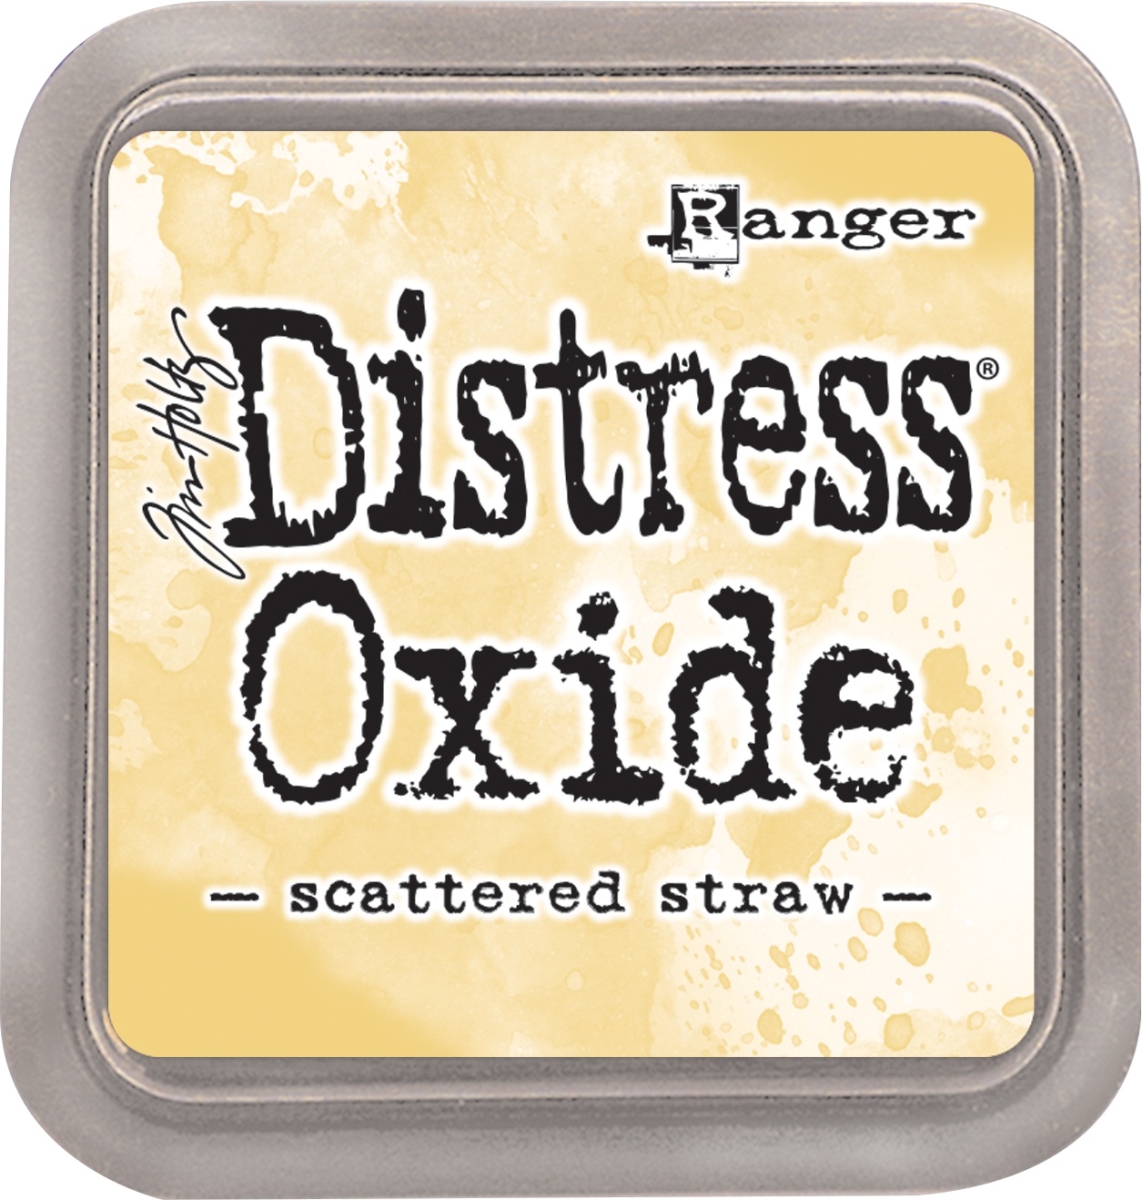 Tdo-56188 Tim Holtz Distress Oxides Ink Pad, Scattered Straw